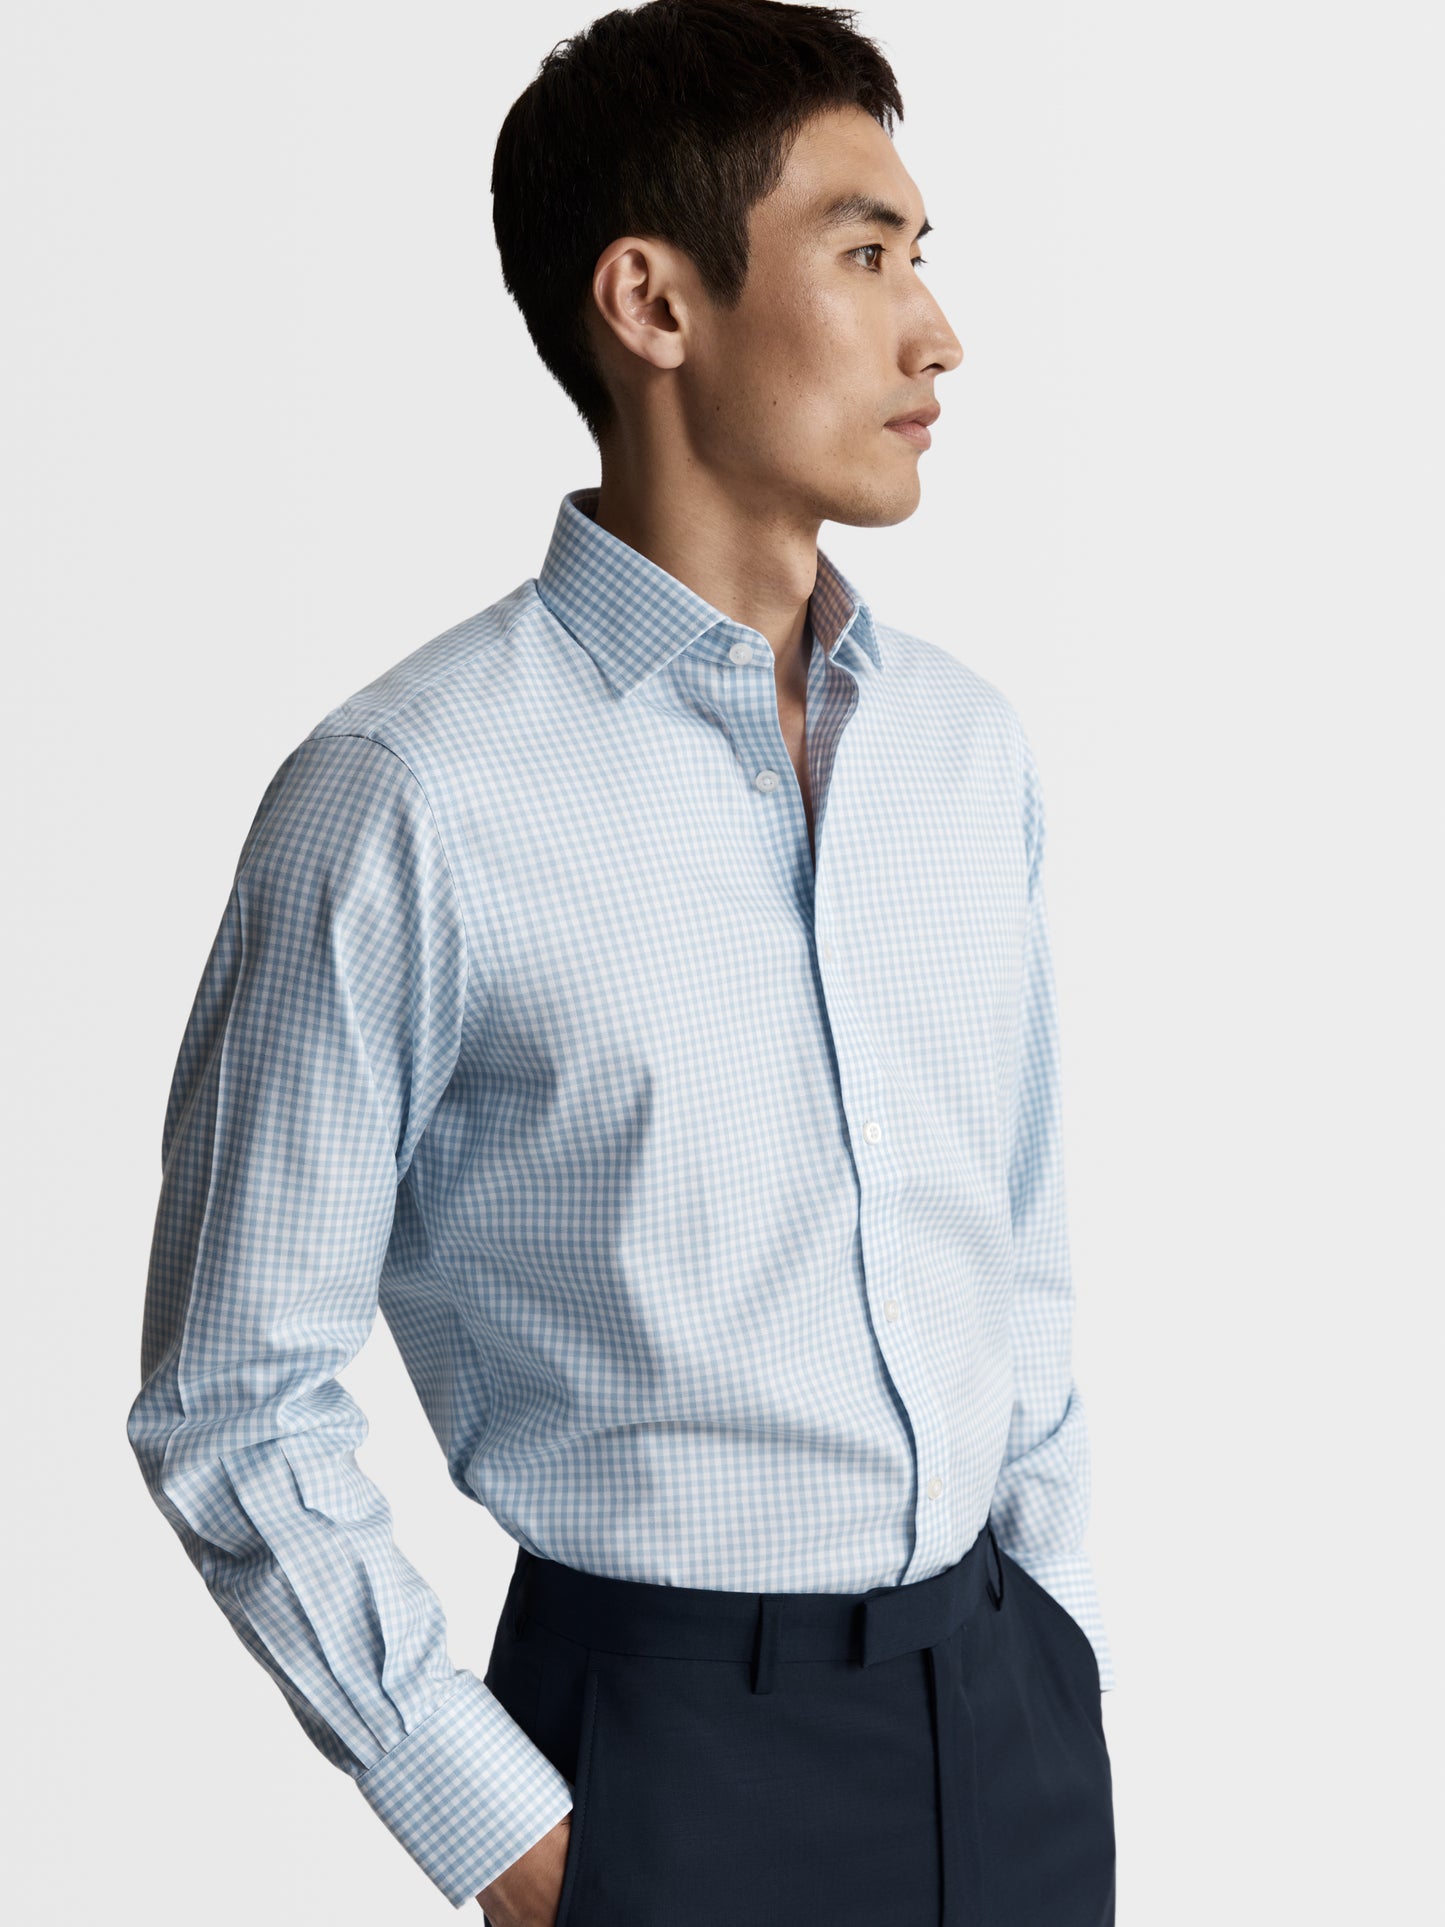 Image 1 of Non-Iron Light Blue Gingham Twill Regular Fit Single Cuff Classic Collar Shirt